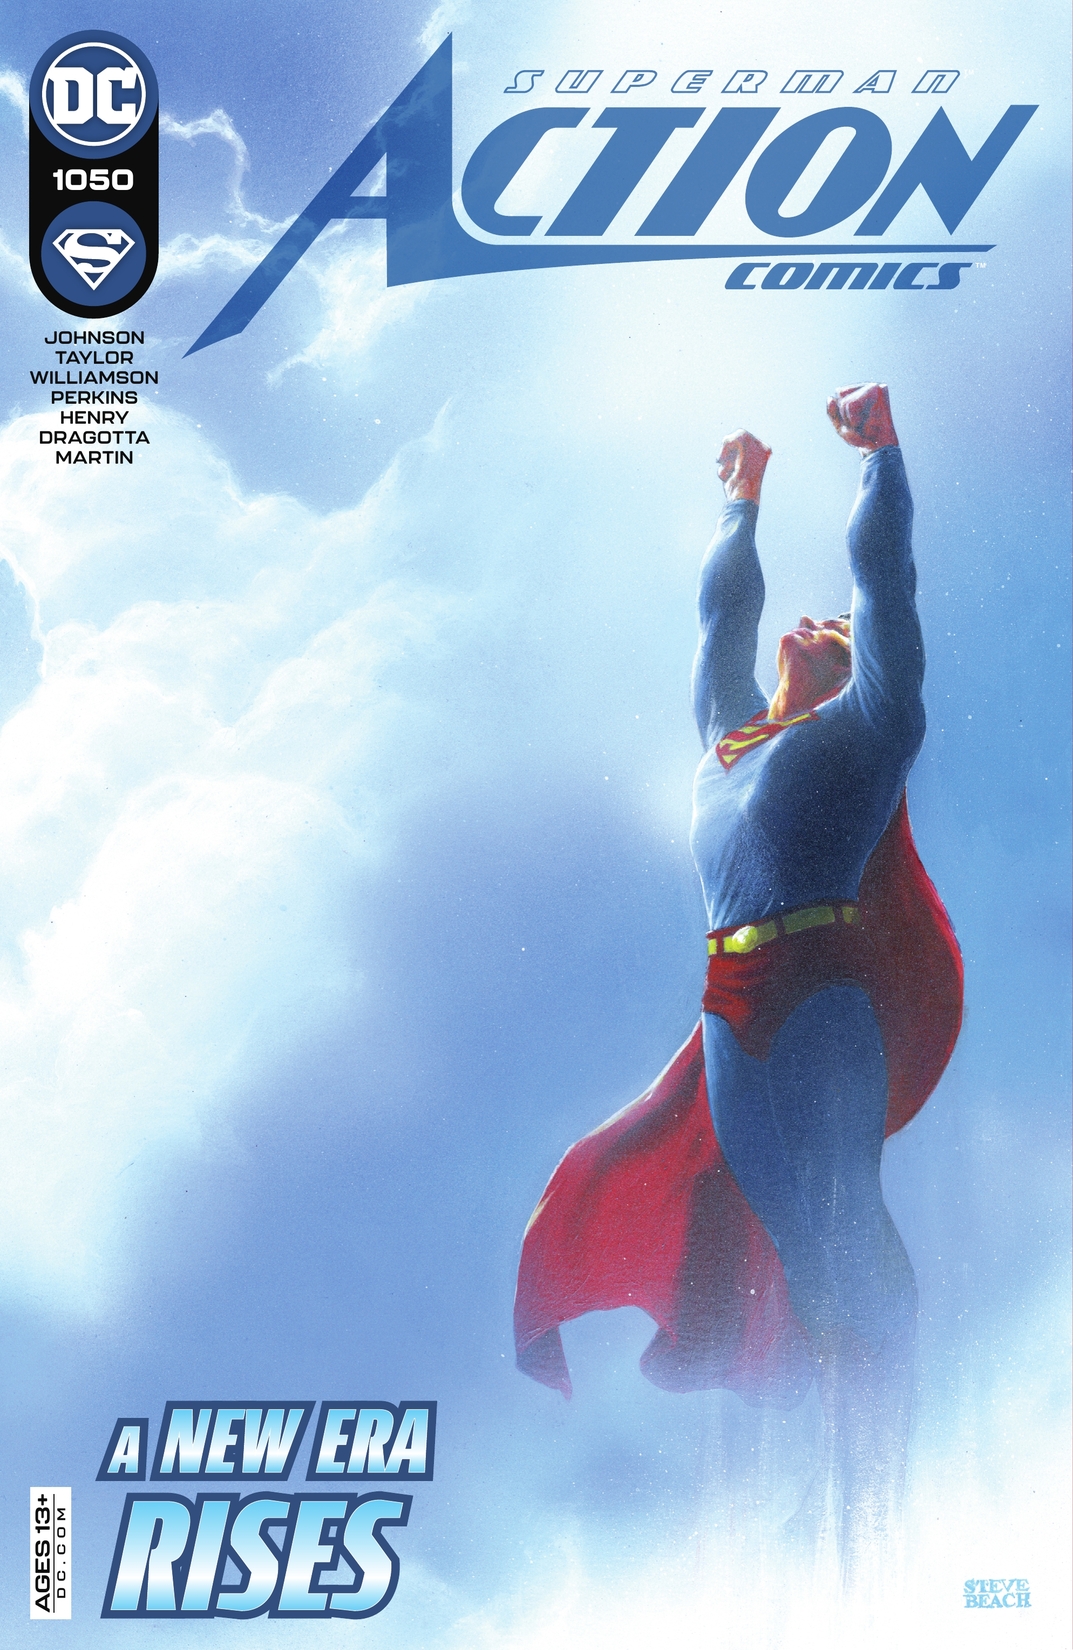 Action Comics (2016-) #1050 preview images